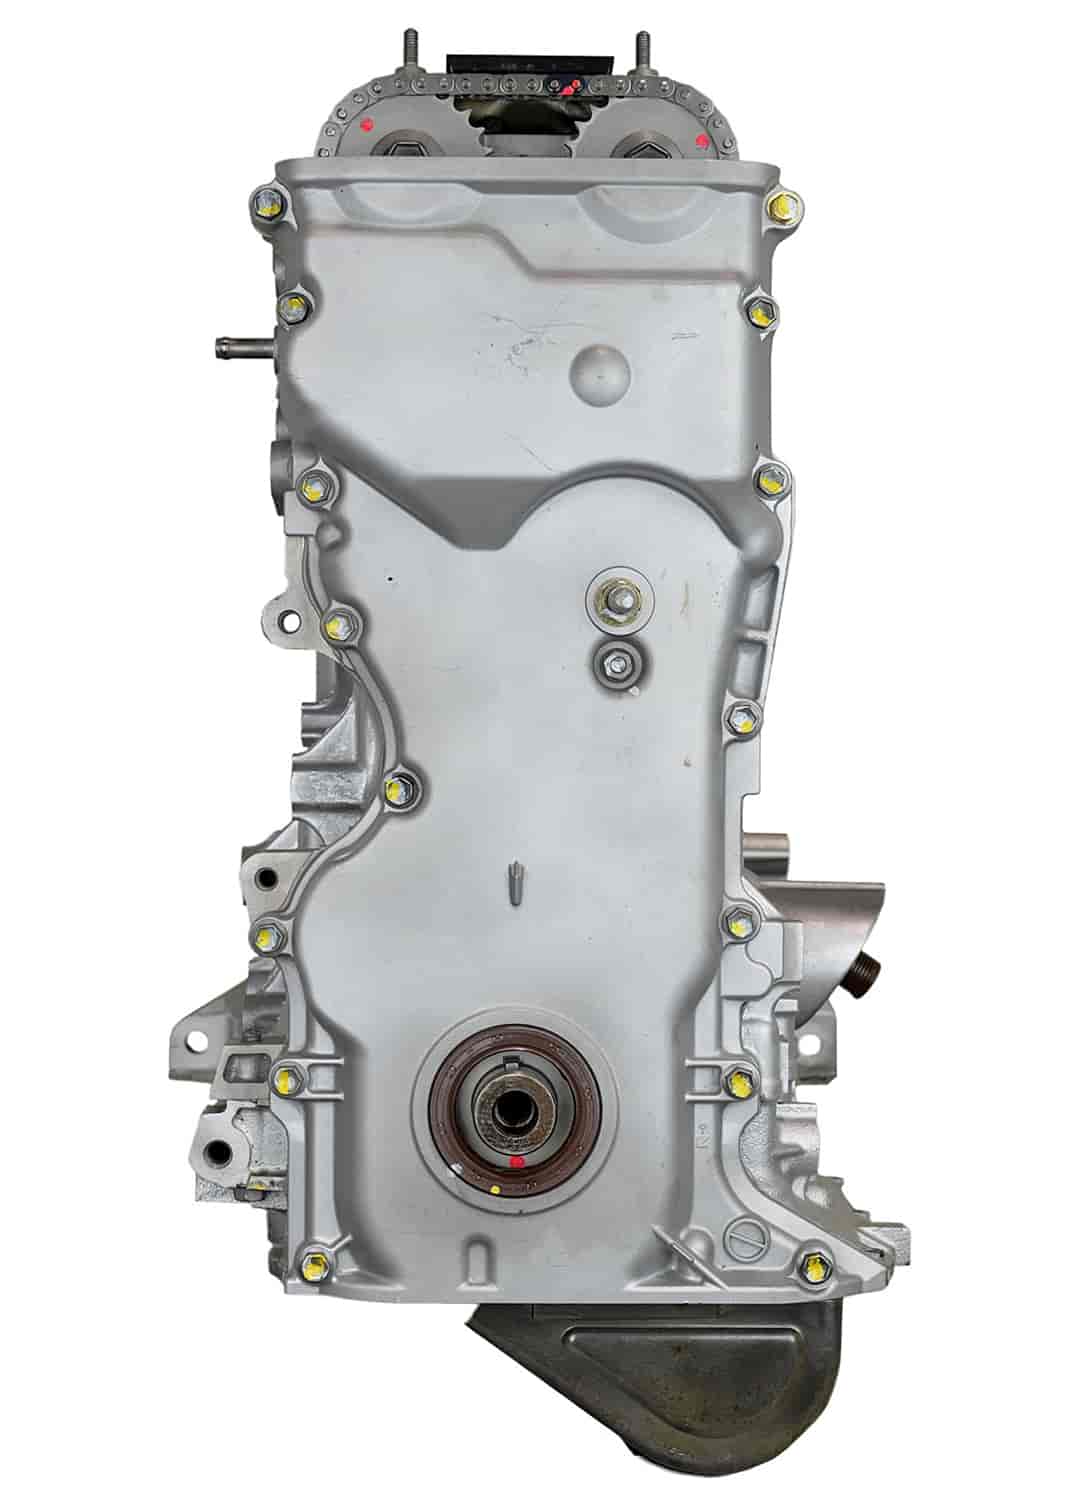 Remanufactured Crate Engine for 2007-2009 Suzuki SX4 with 2.0L L4